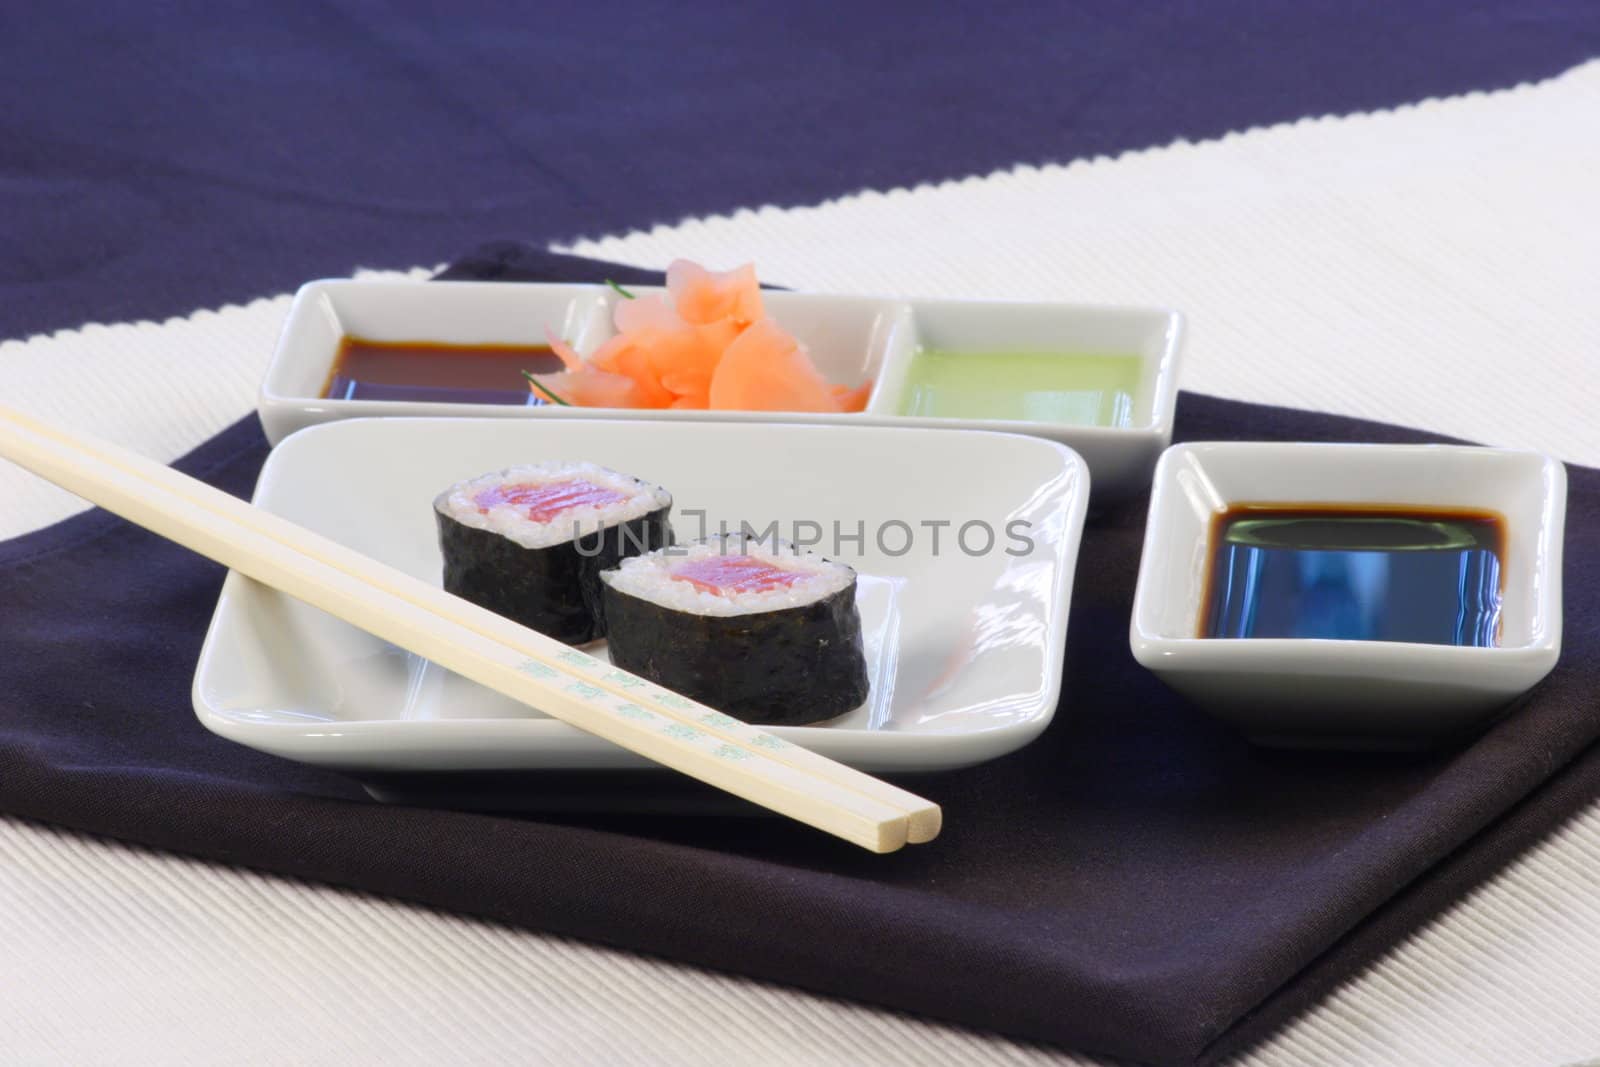 japanese sushi by tacar